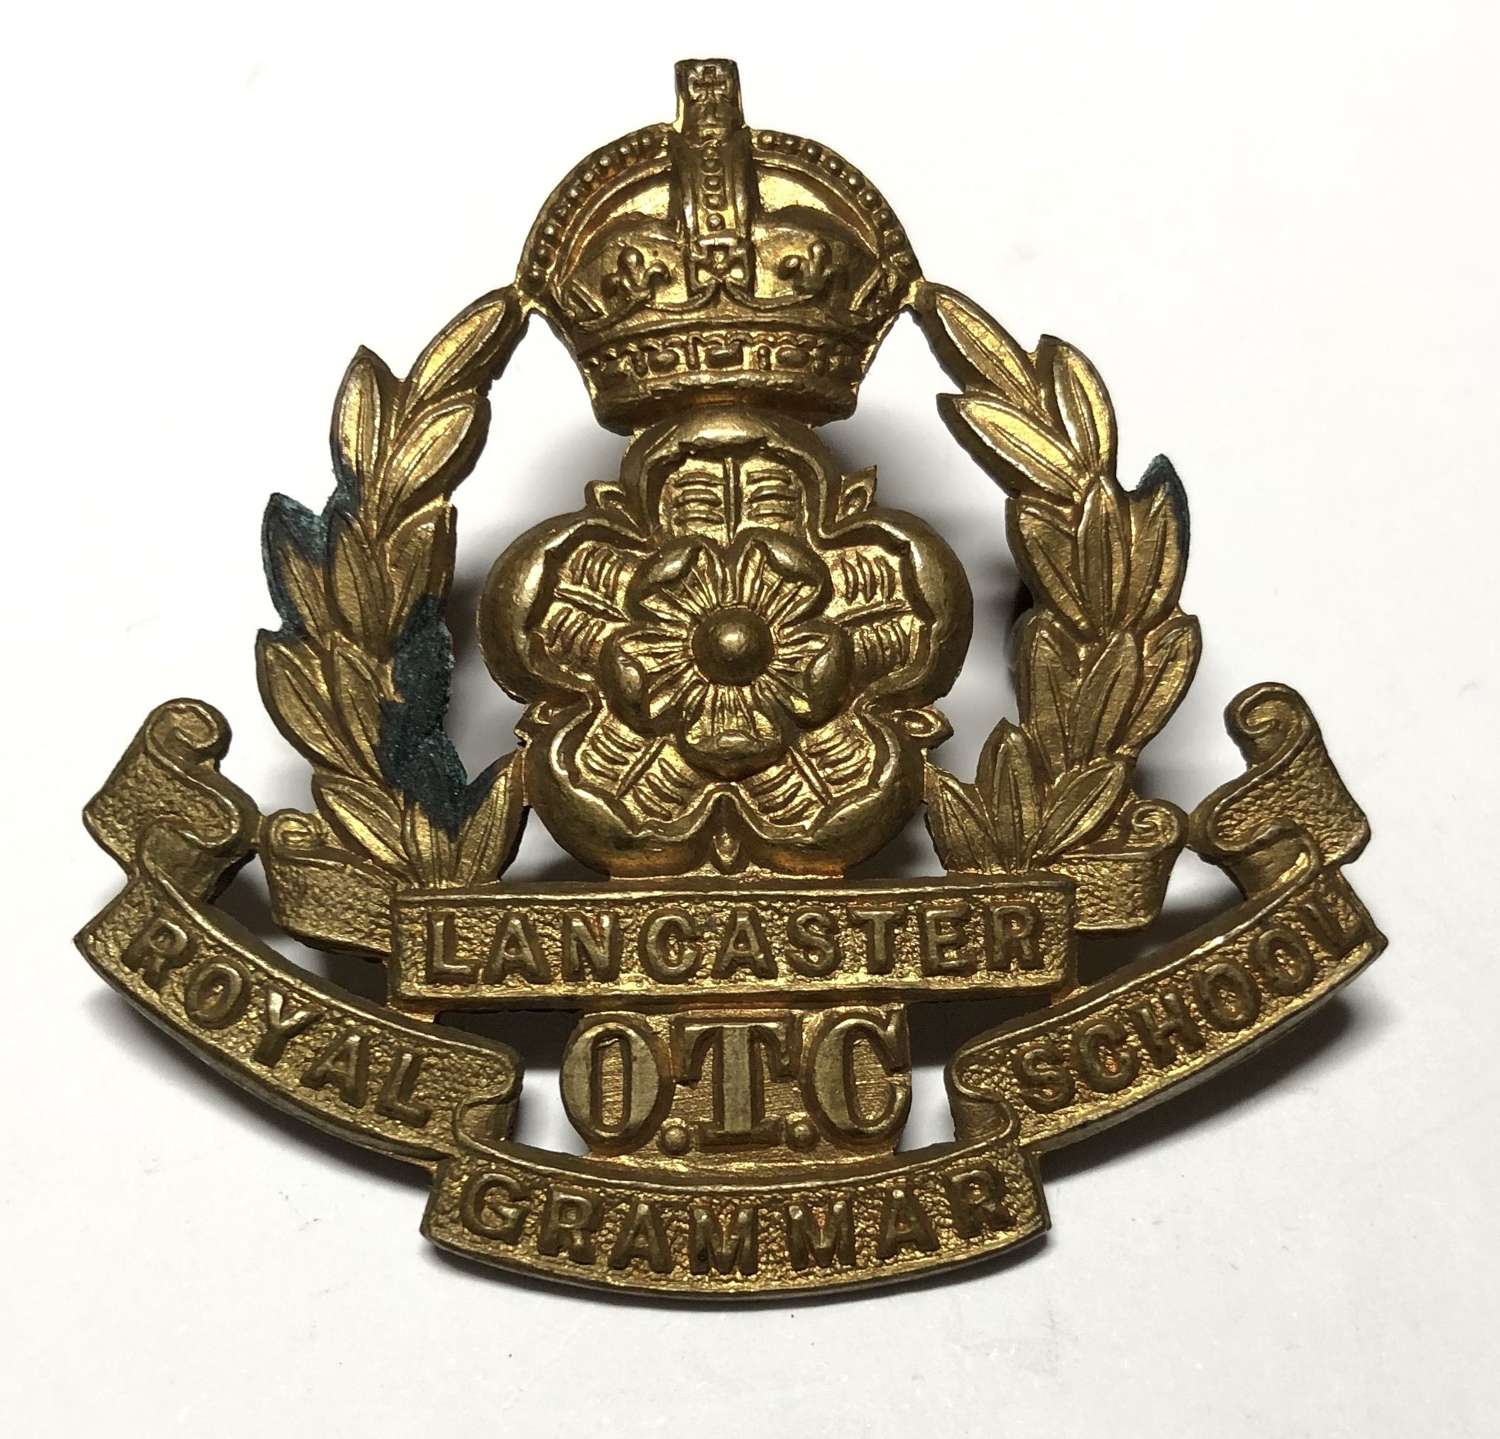 Lancasater Royal Grammar School OTC cap badge